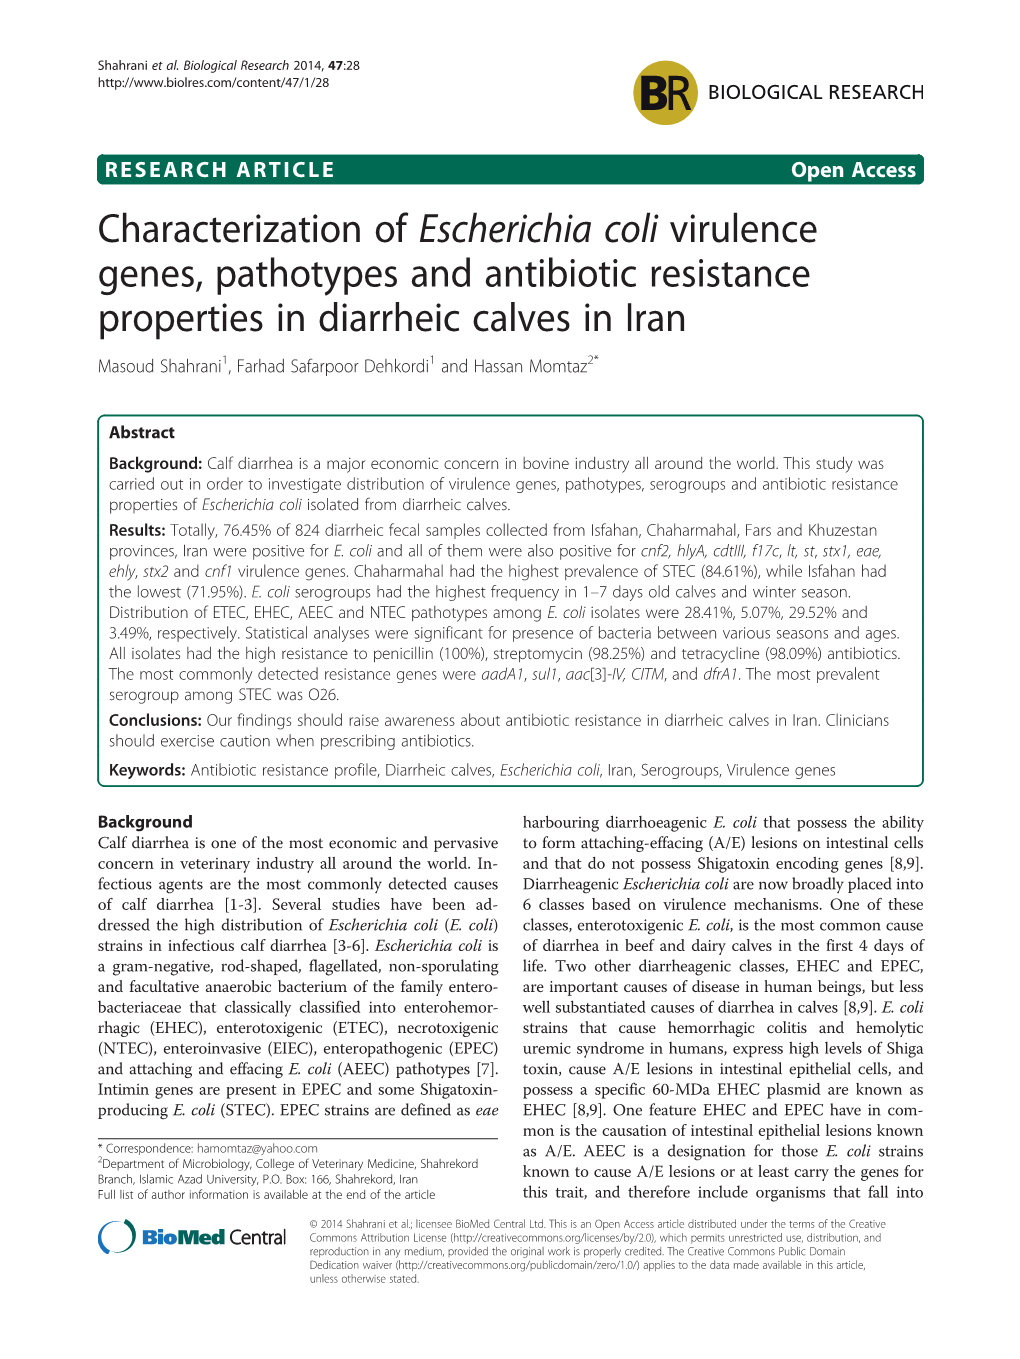 Characterization of Escherichia Coli Virulence Genes